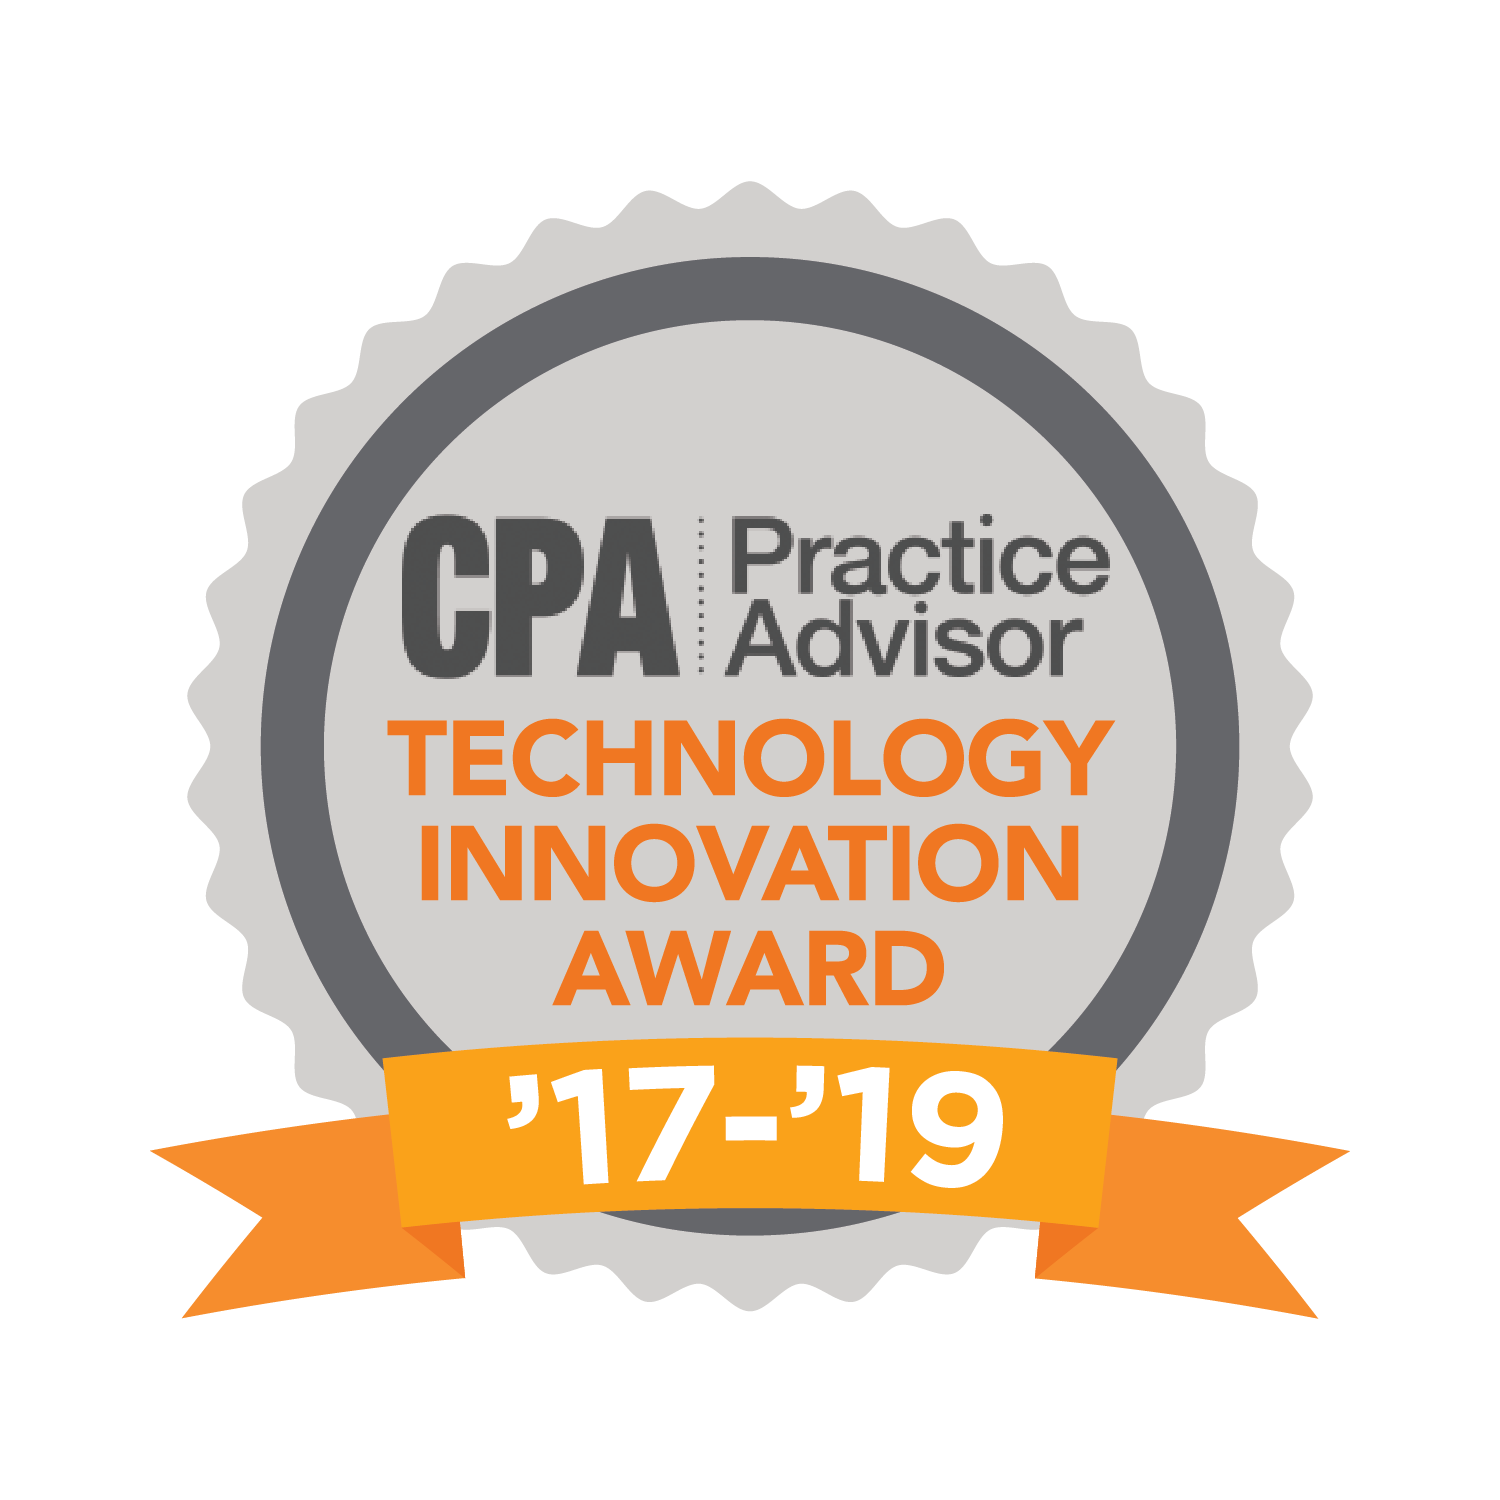 CPA Practice Advisor Technology Innovation Award for 2017